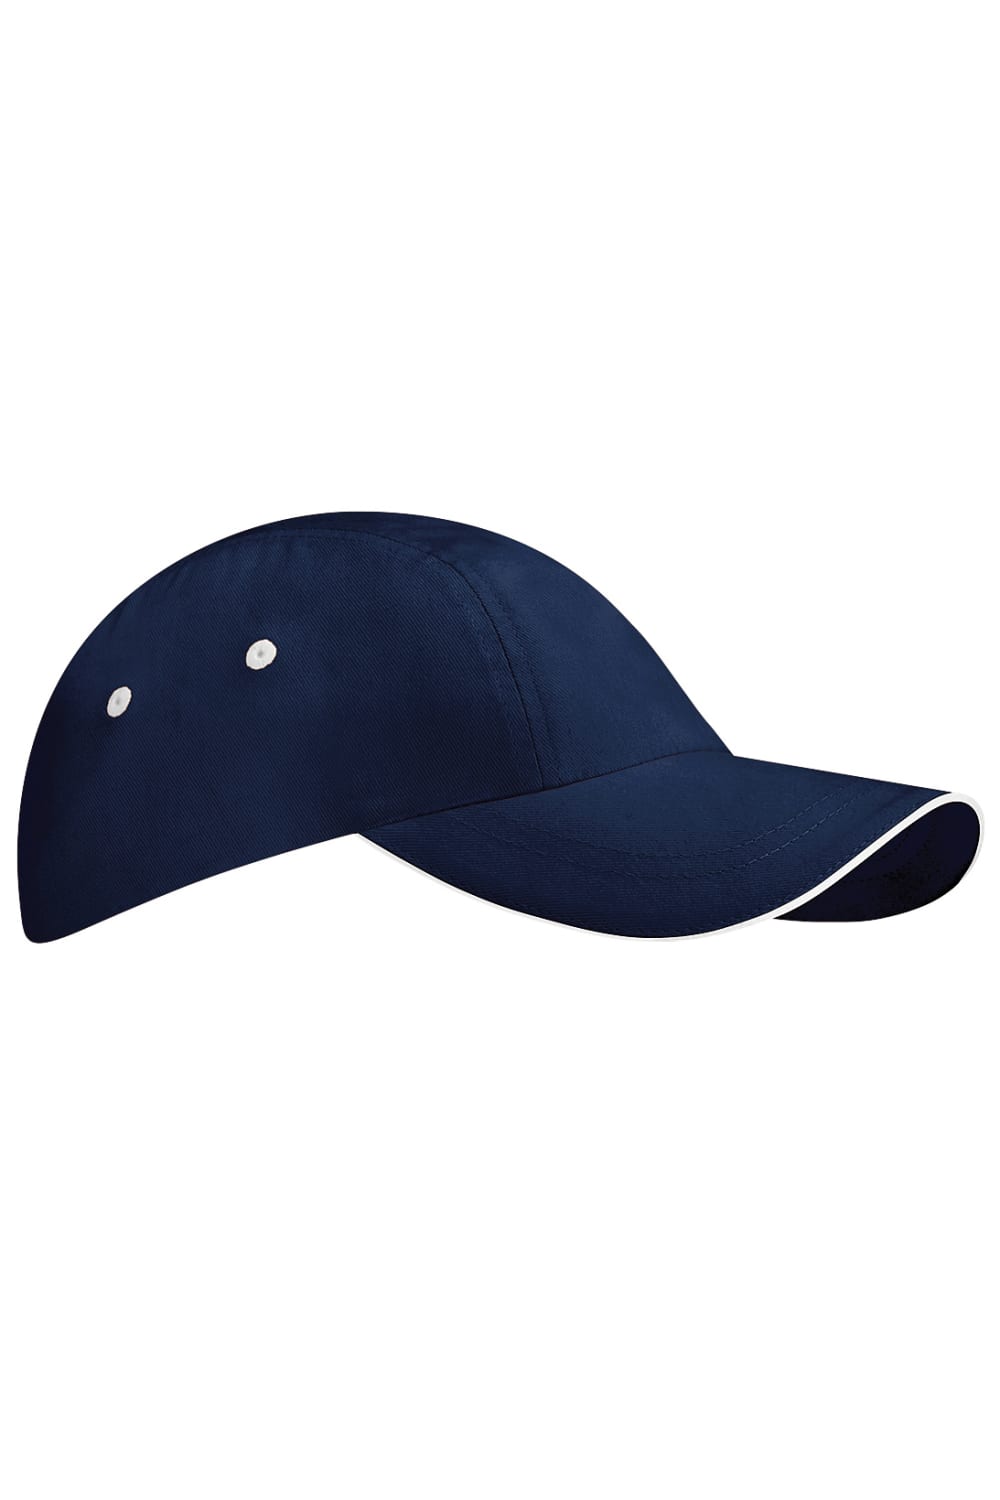 Beechfield Unisex Brushed Cotton Sports Baseball Cap / Headwear (French Navy/White)